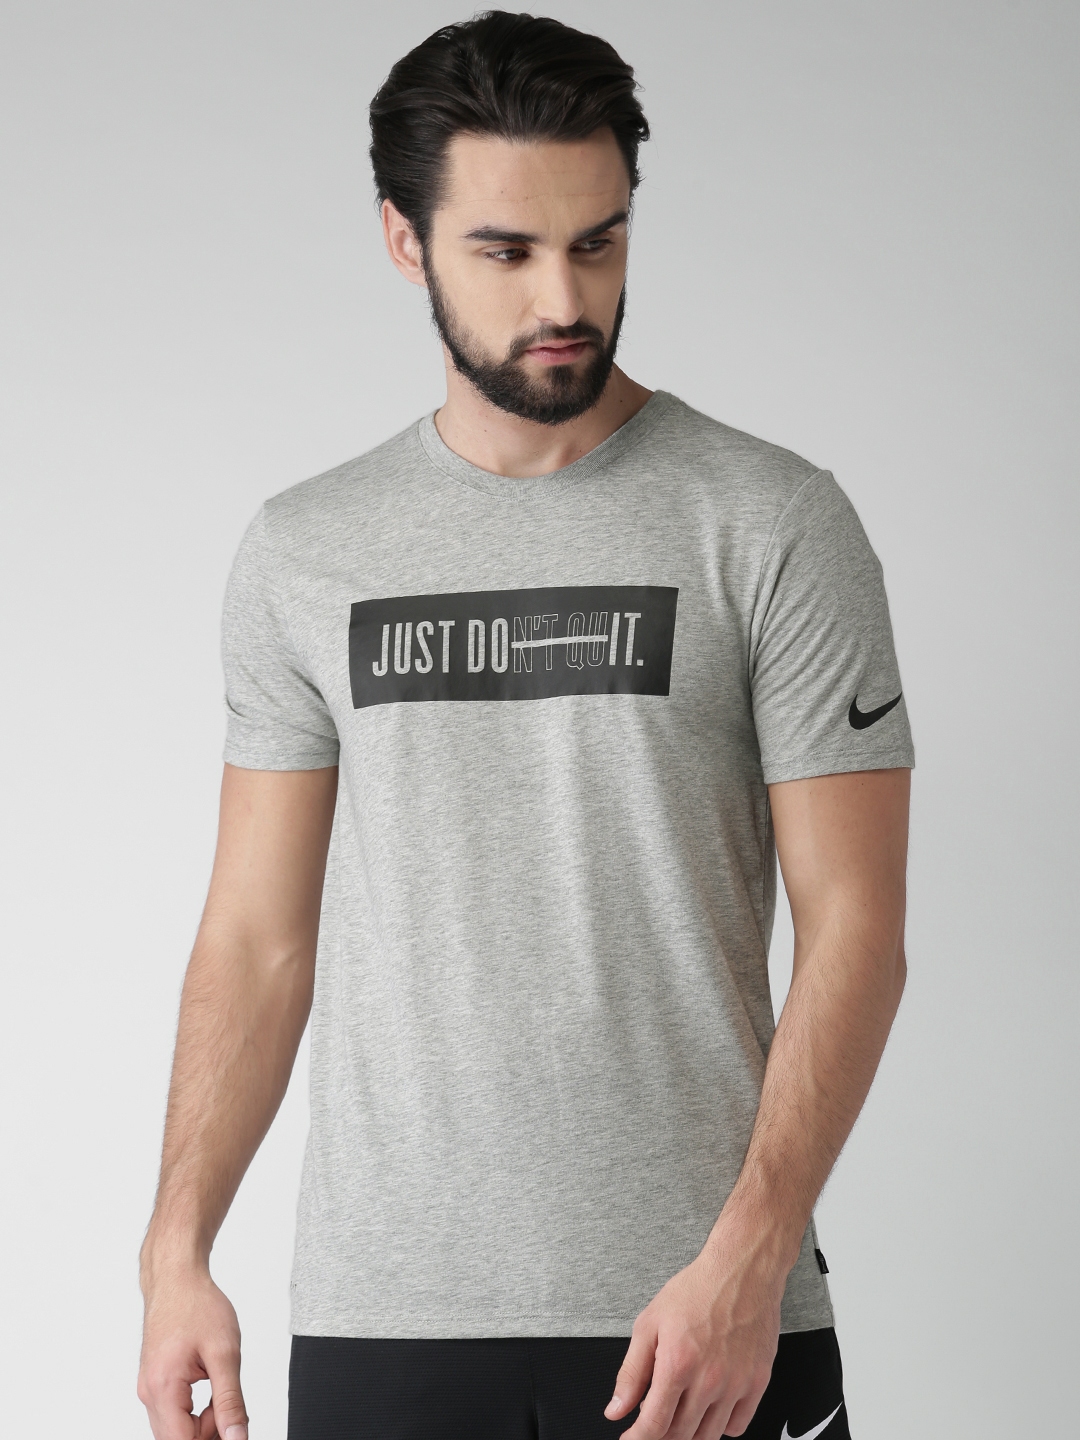 diario Parche Montañas climáticas Buy Nike Men Grey Melange Printed Round Neck DRY TEE DB DON'T QUIT T Shirt  - Tshirts for Men 2437429 | Myntra